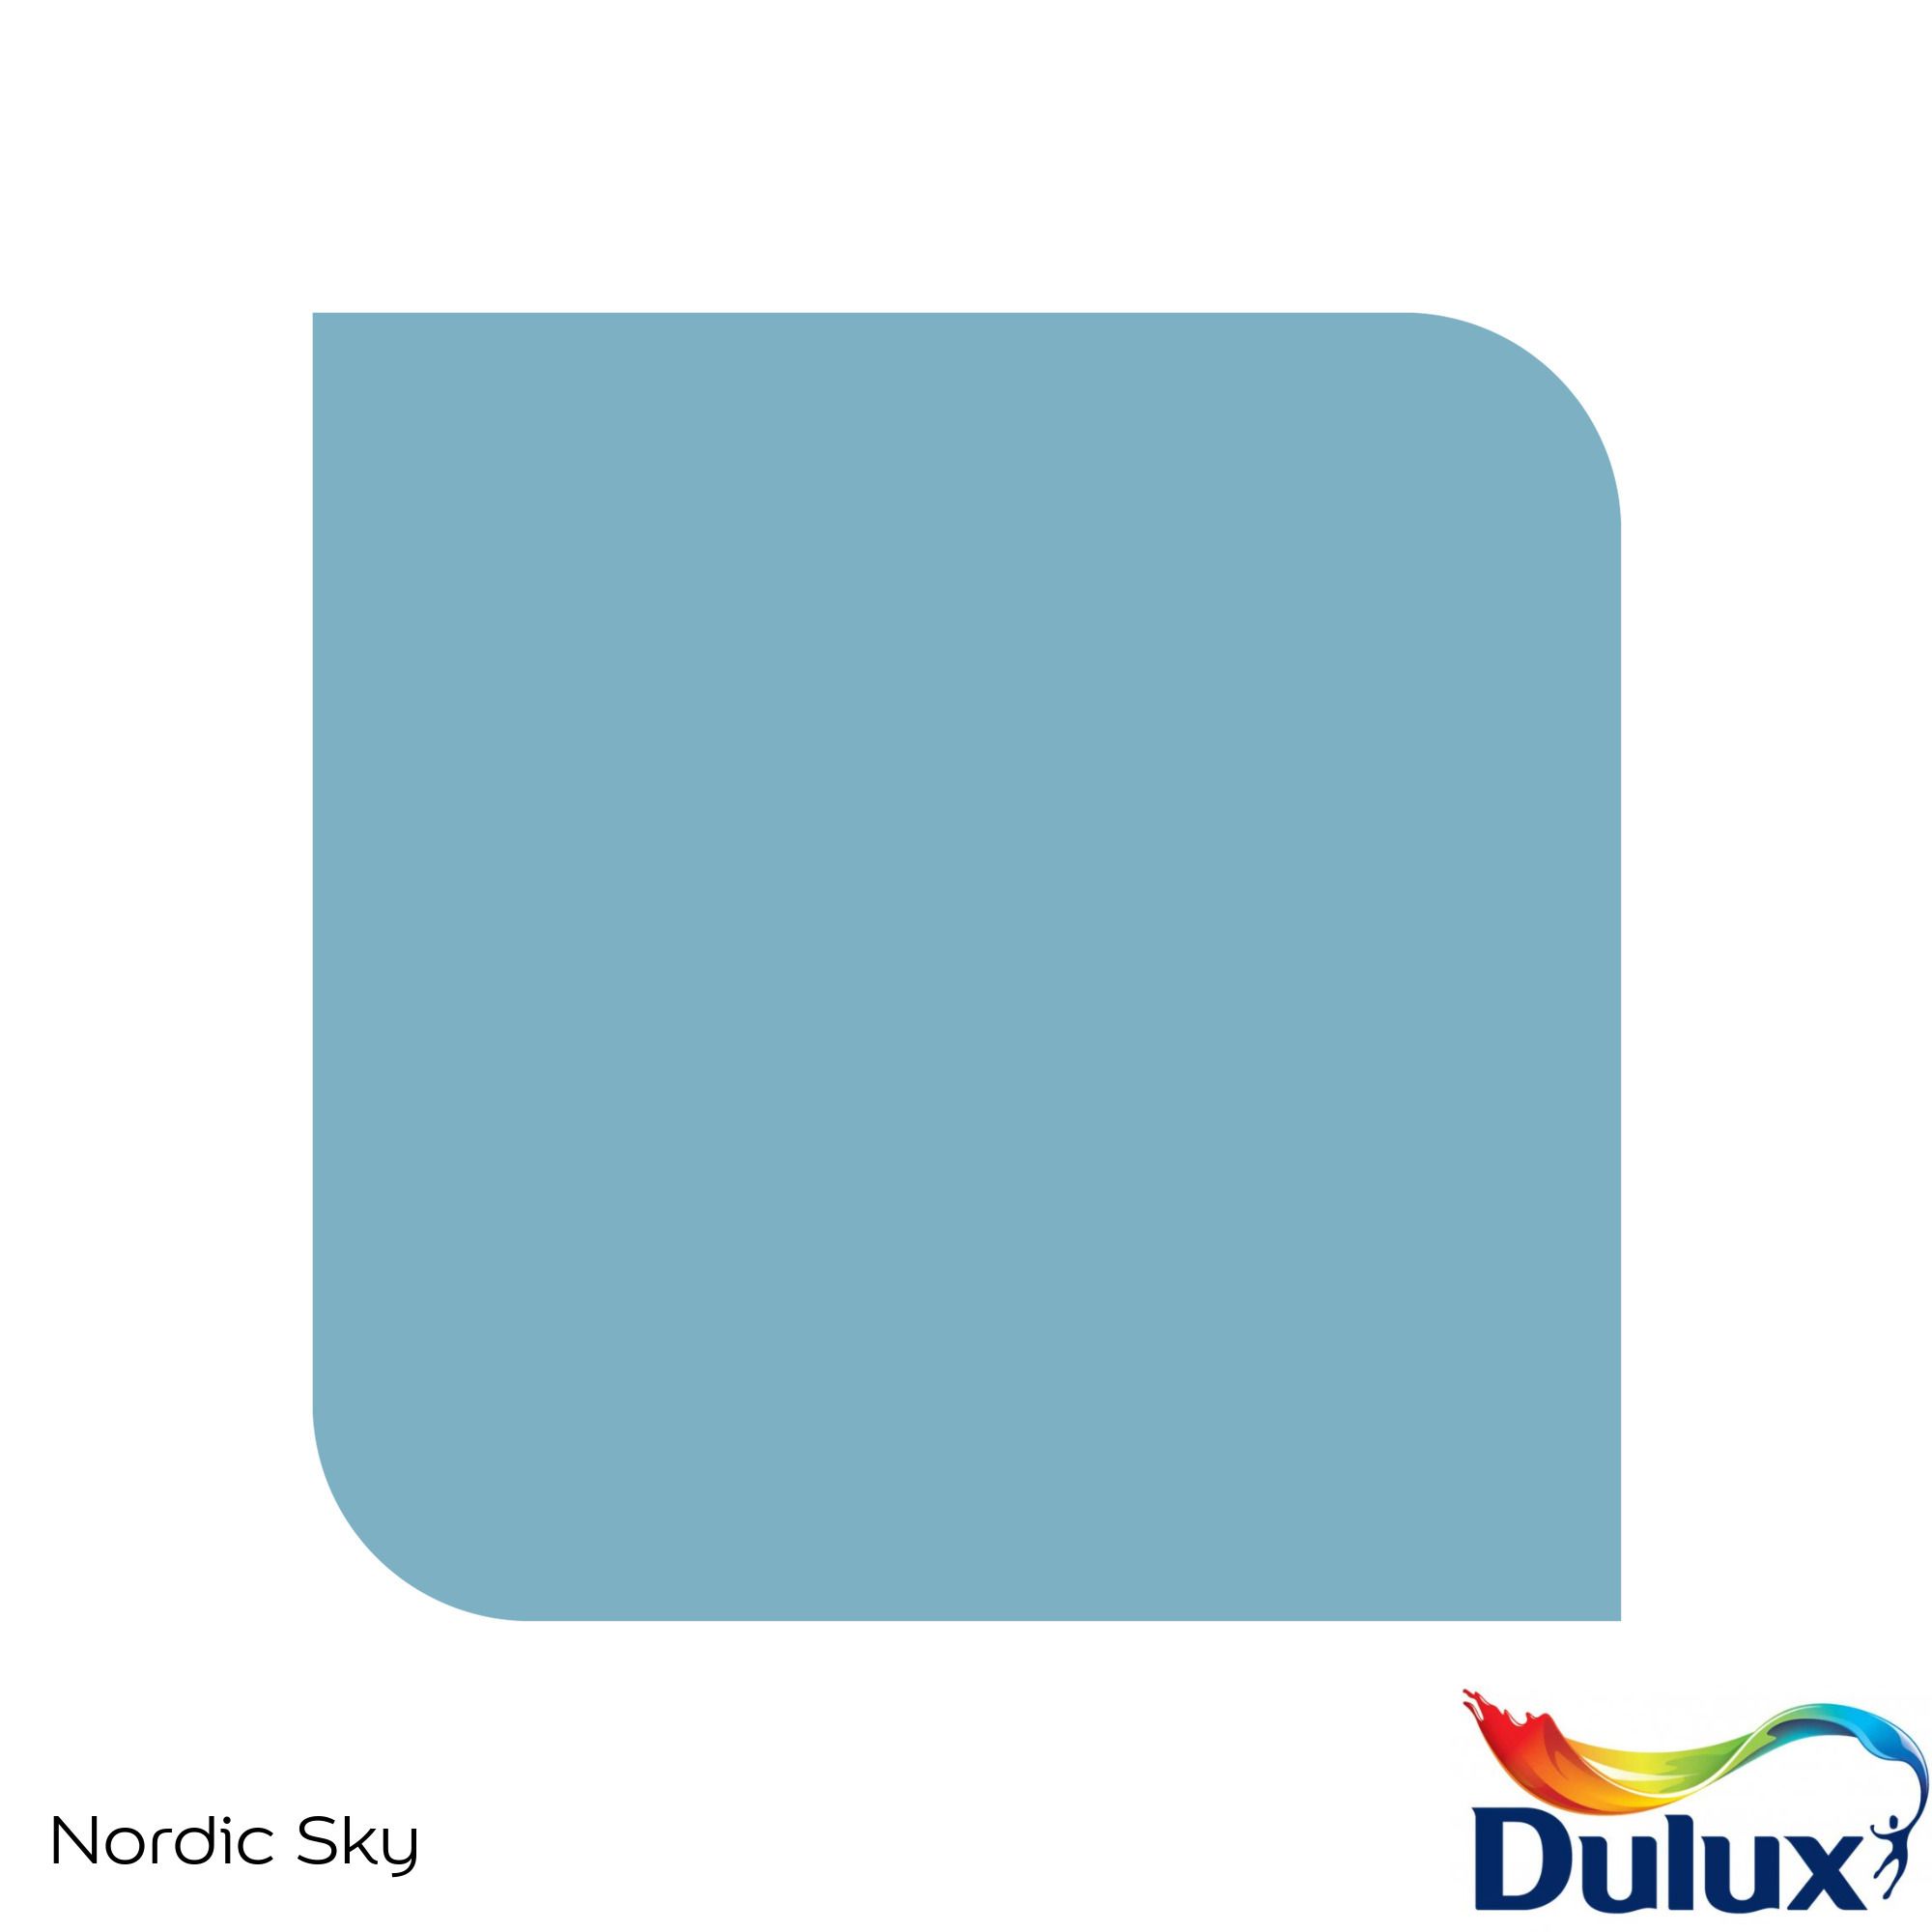 Dulux Standard Nordic sky Matt Emulsion paint, 30ml Tester pot